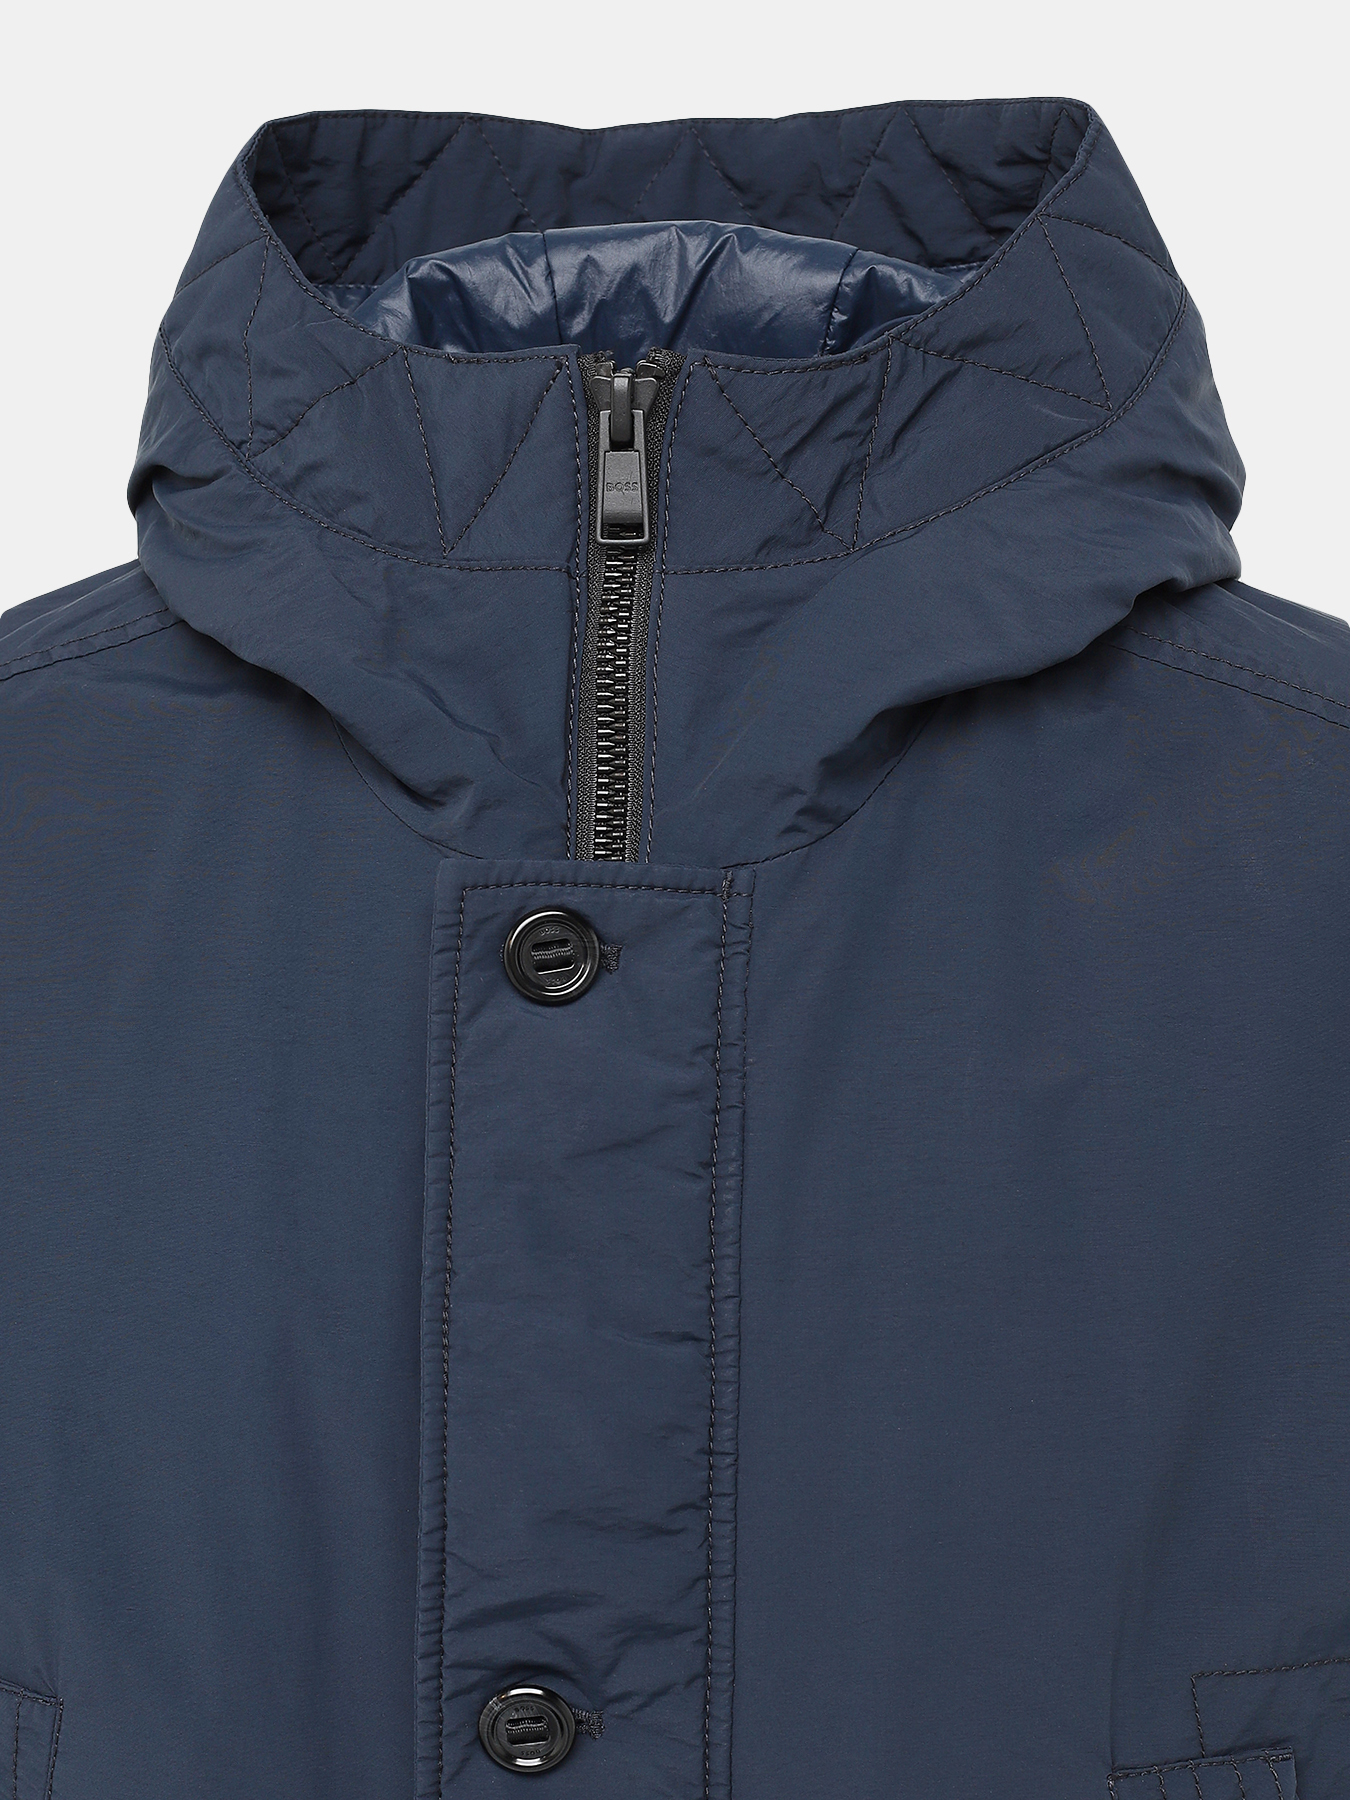 Удлиненная куртка Olgara BOSS 437906-026, цвет темно-синий, размер 50 - фото 4